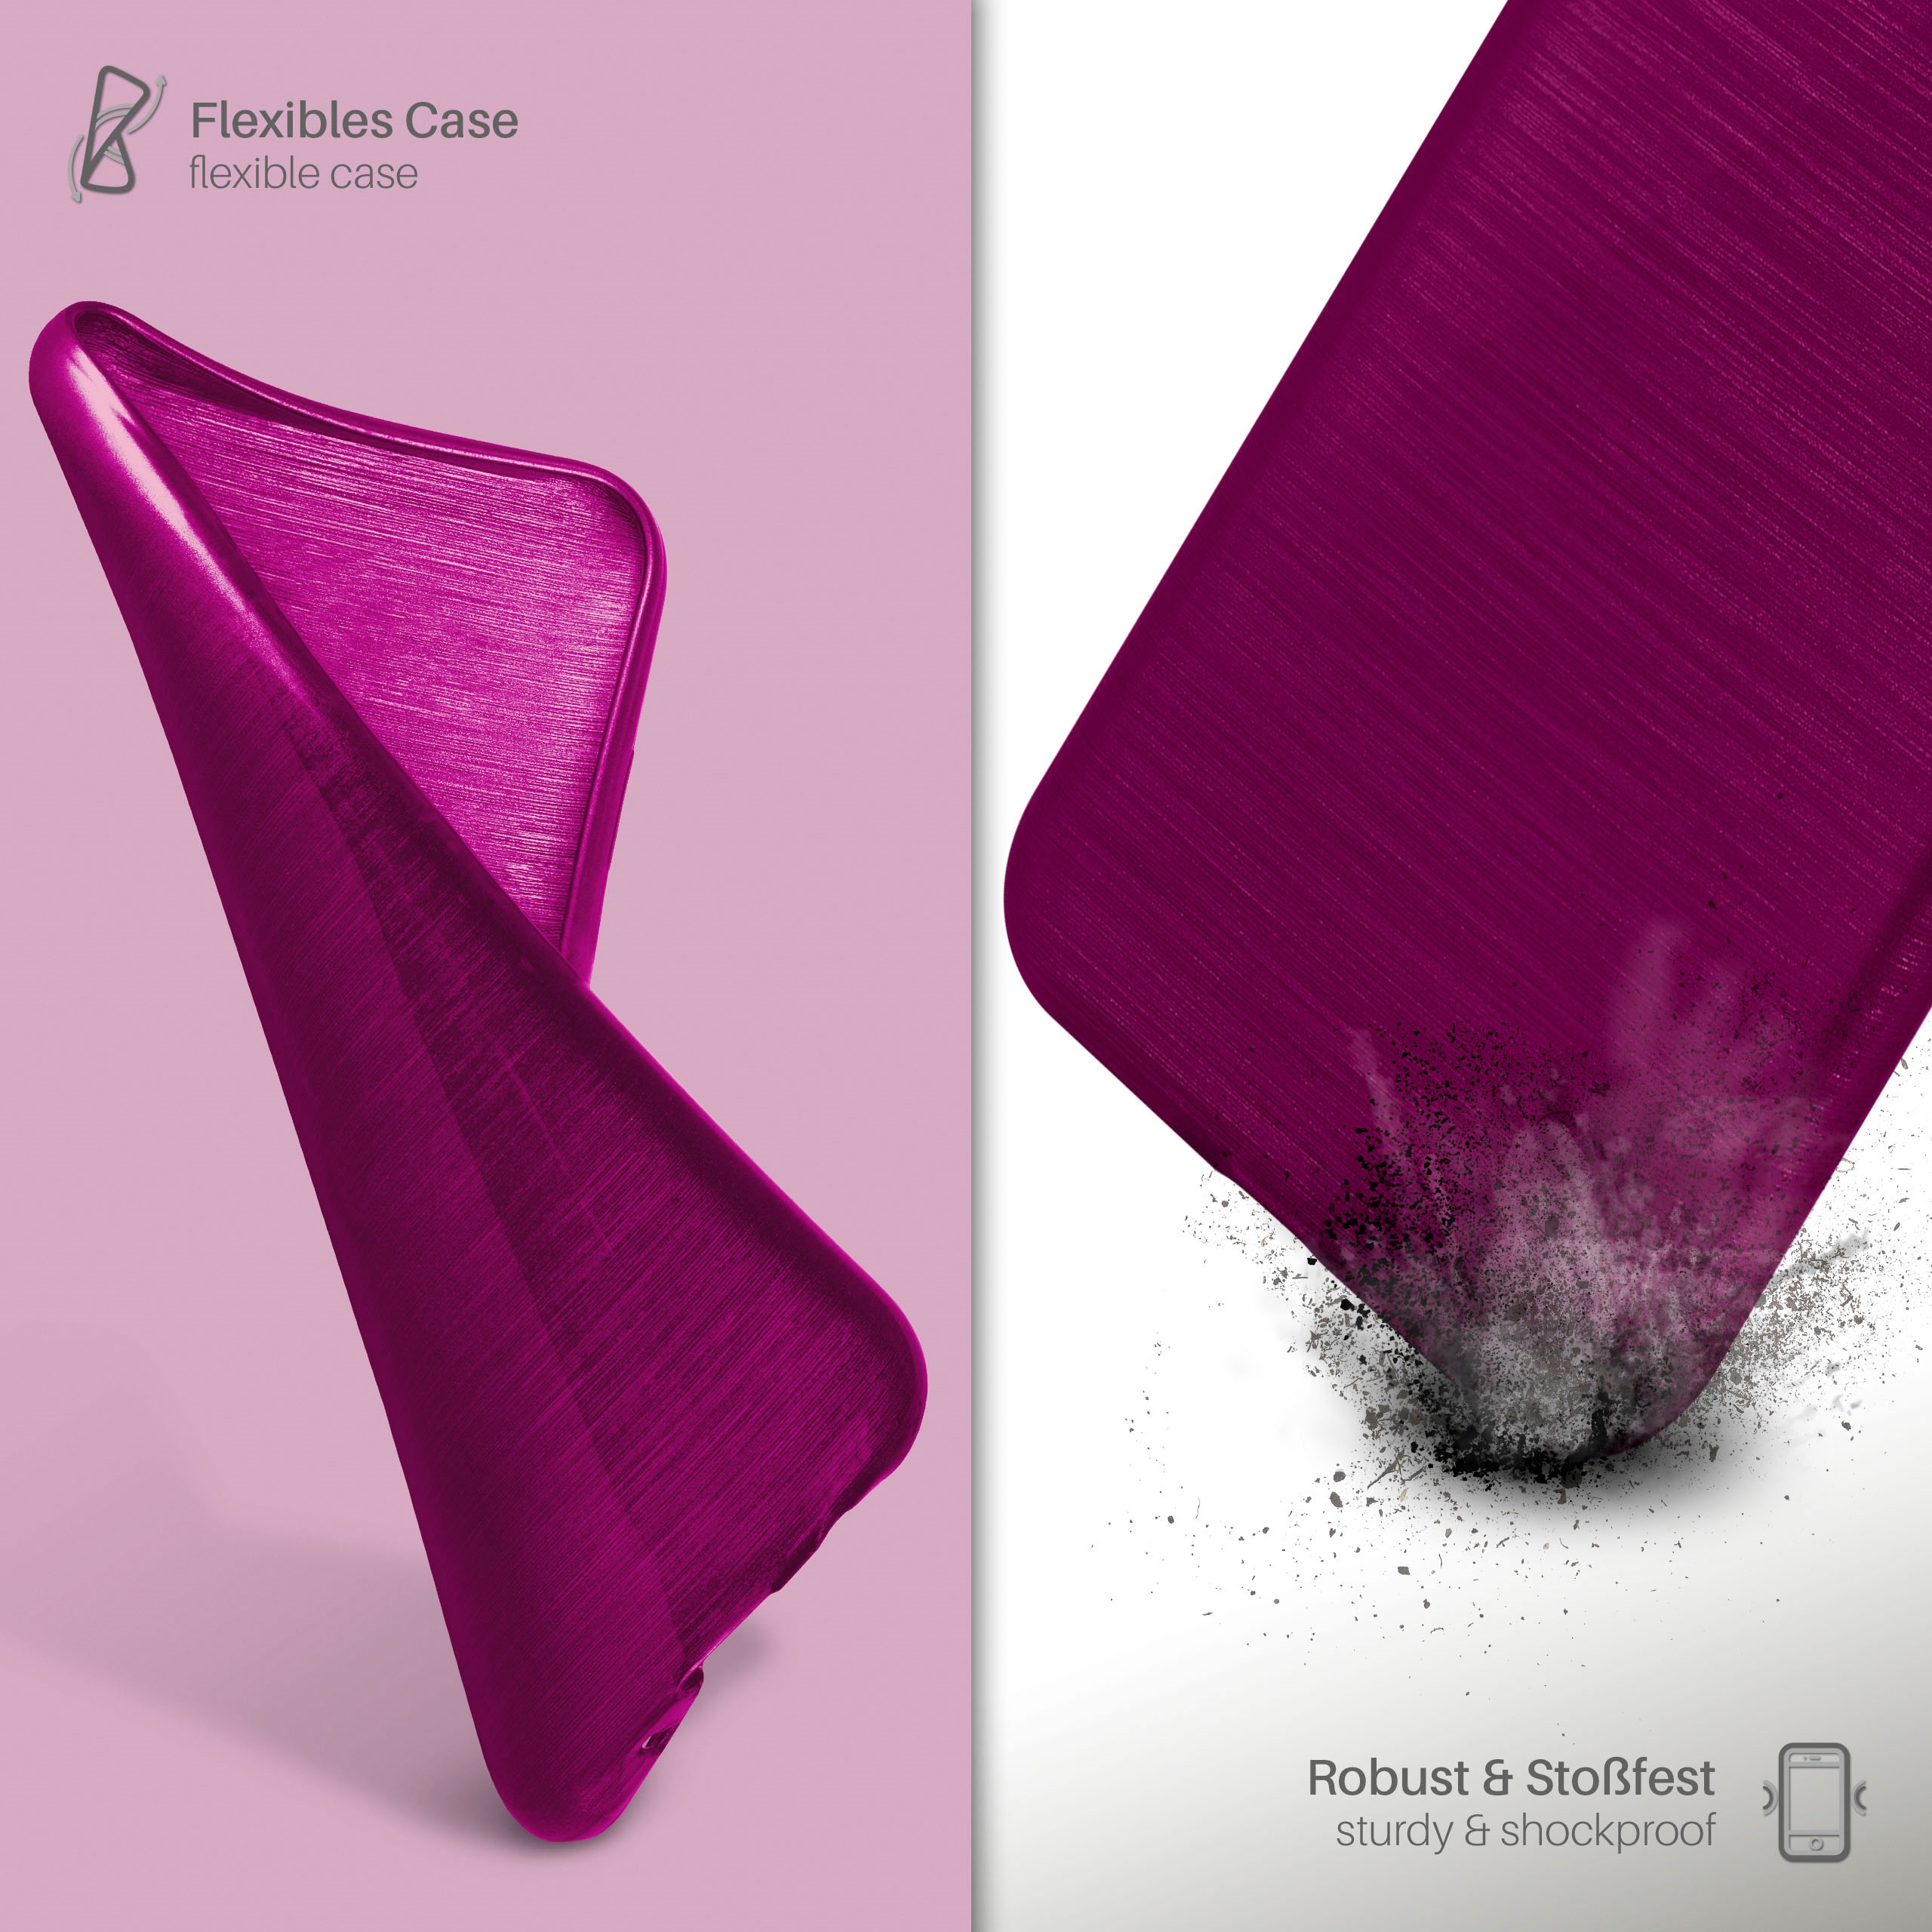 Purpure-Purple L70 LG, Backcover, / MOEX L65, Brushed Case,